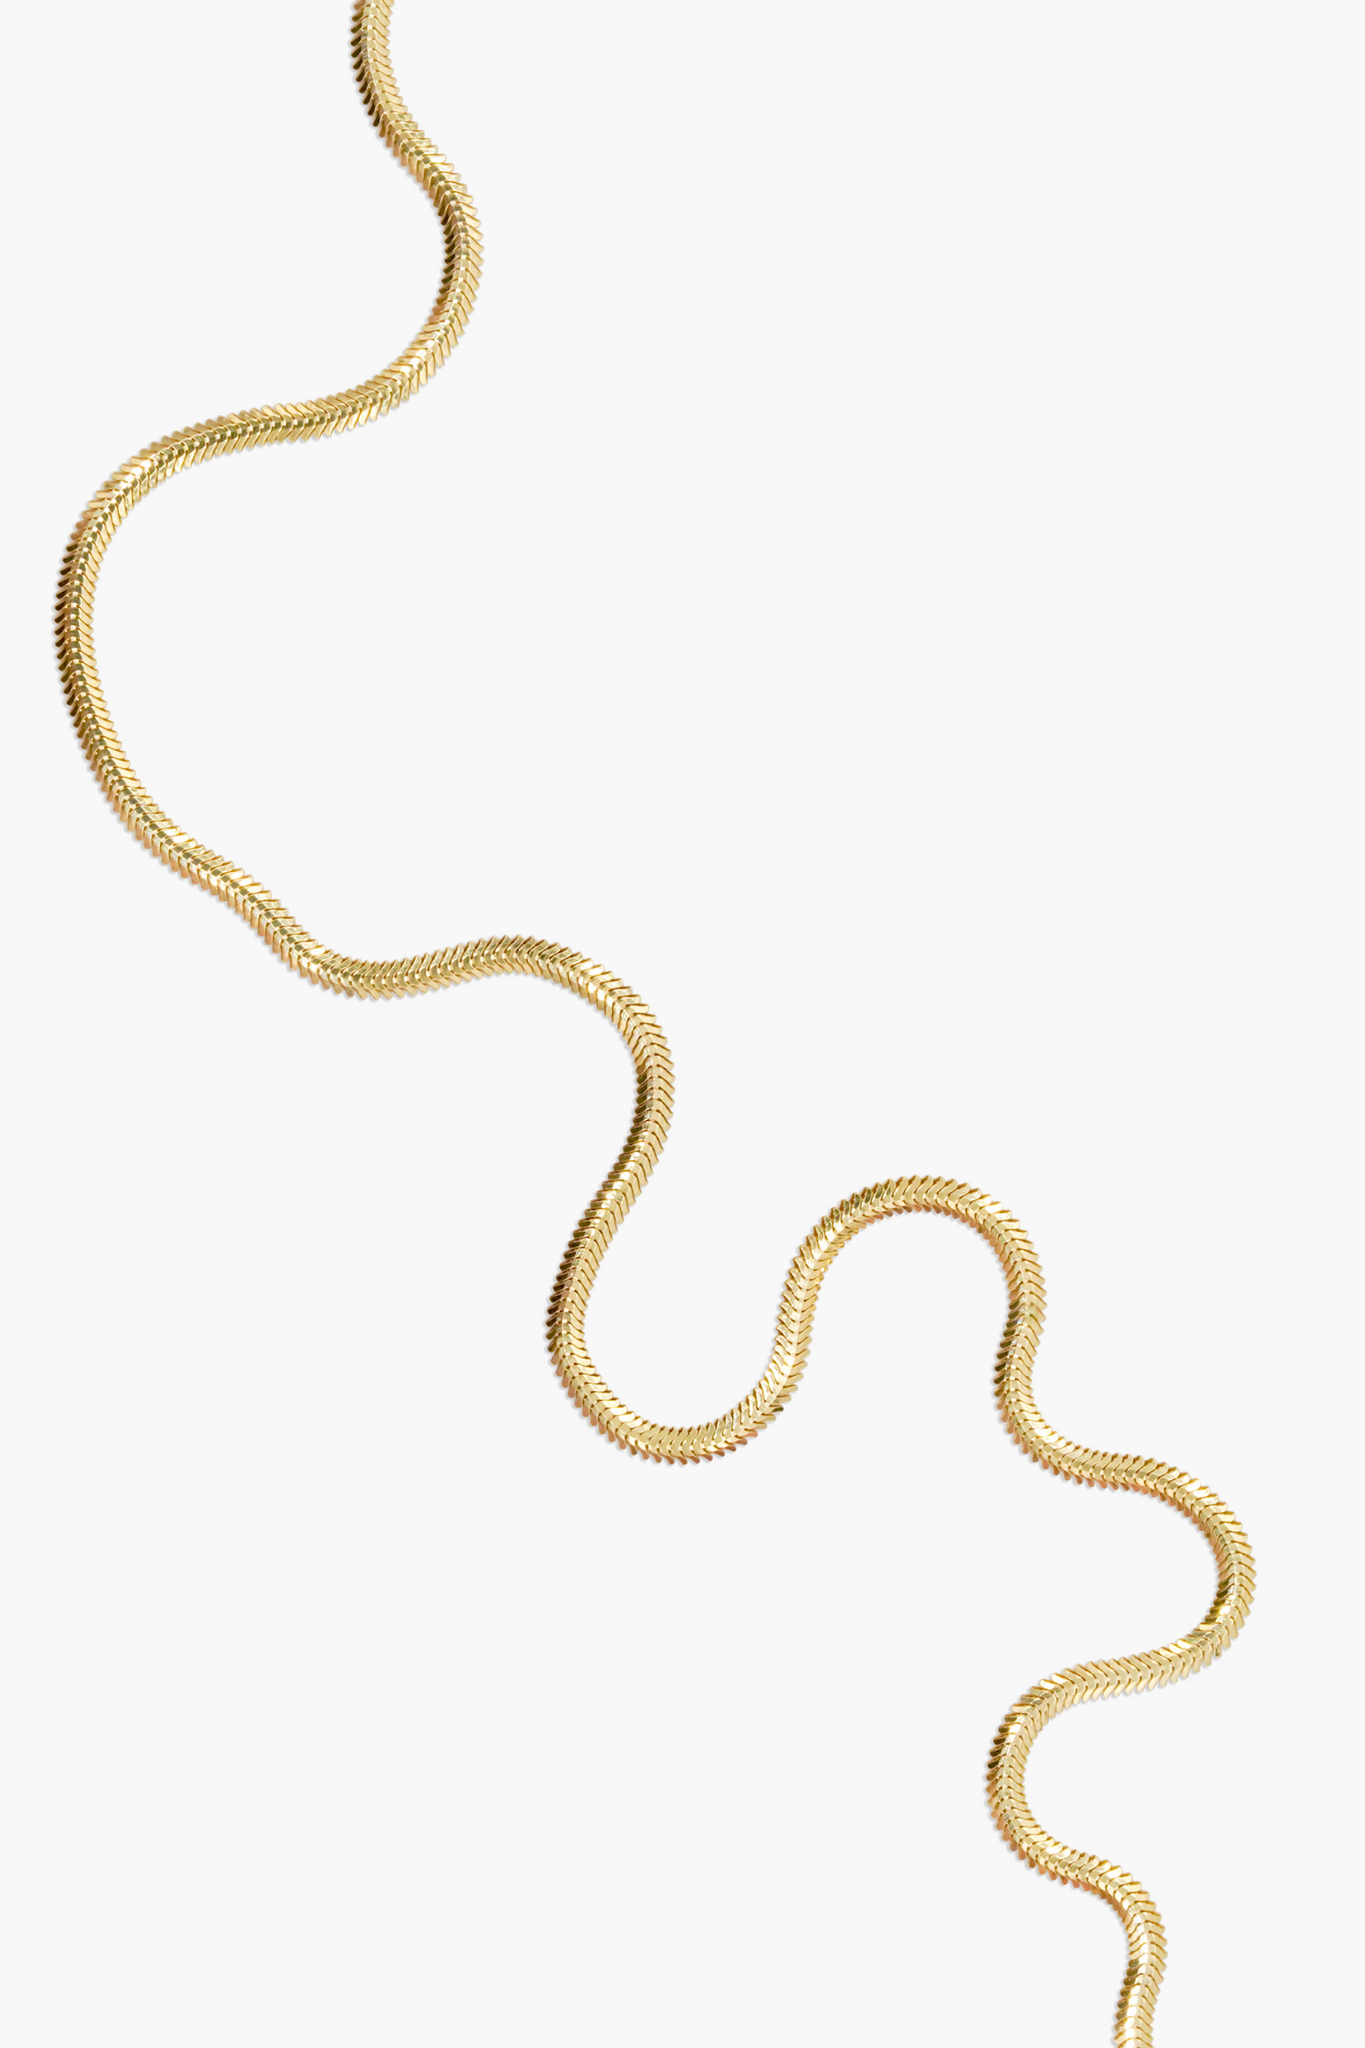 snakebone chain